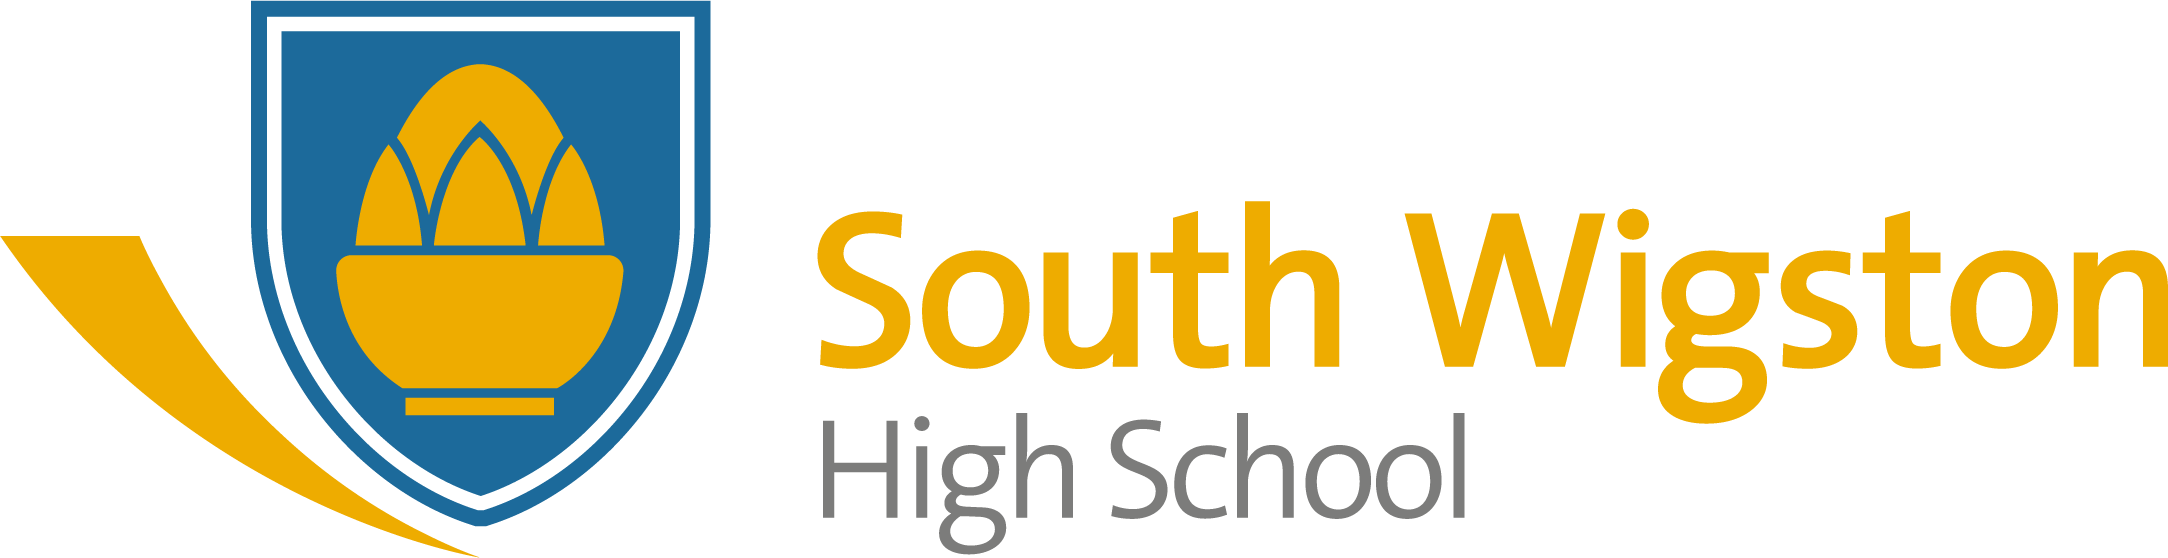 South Wigston High School badge